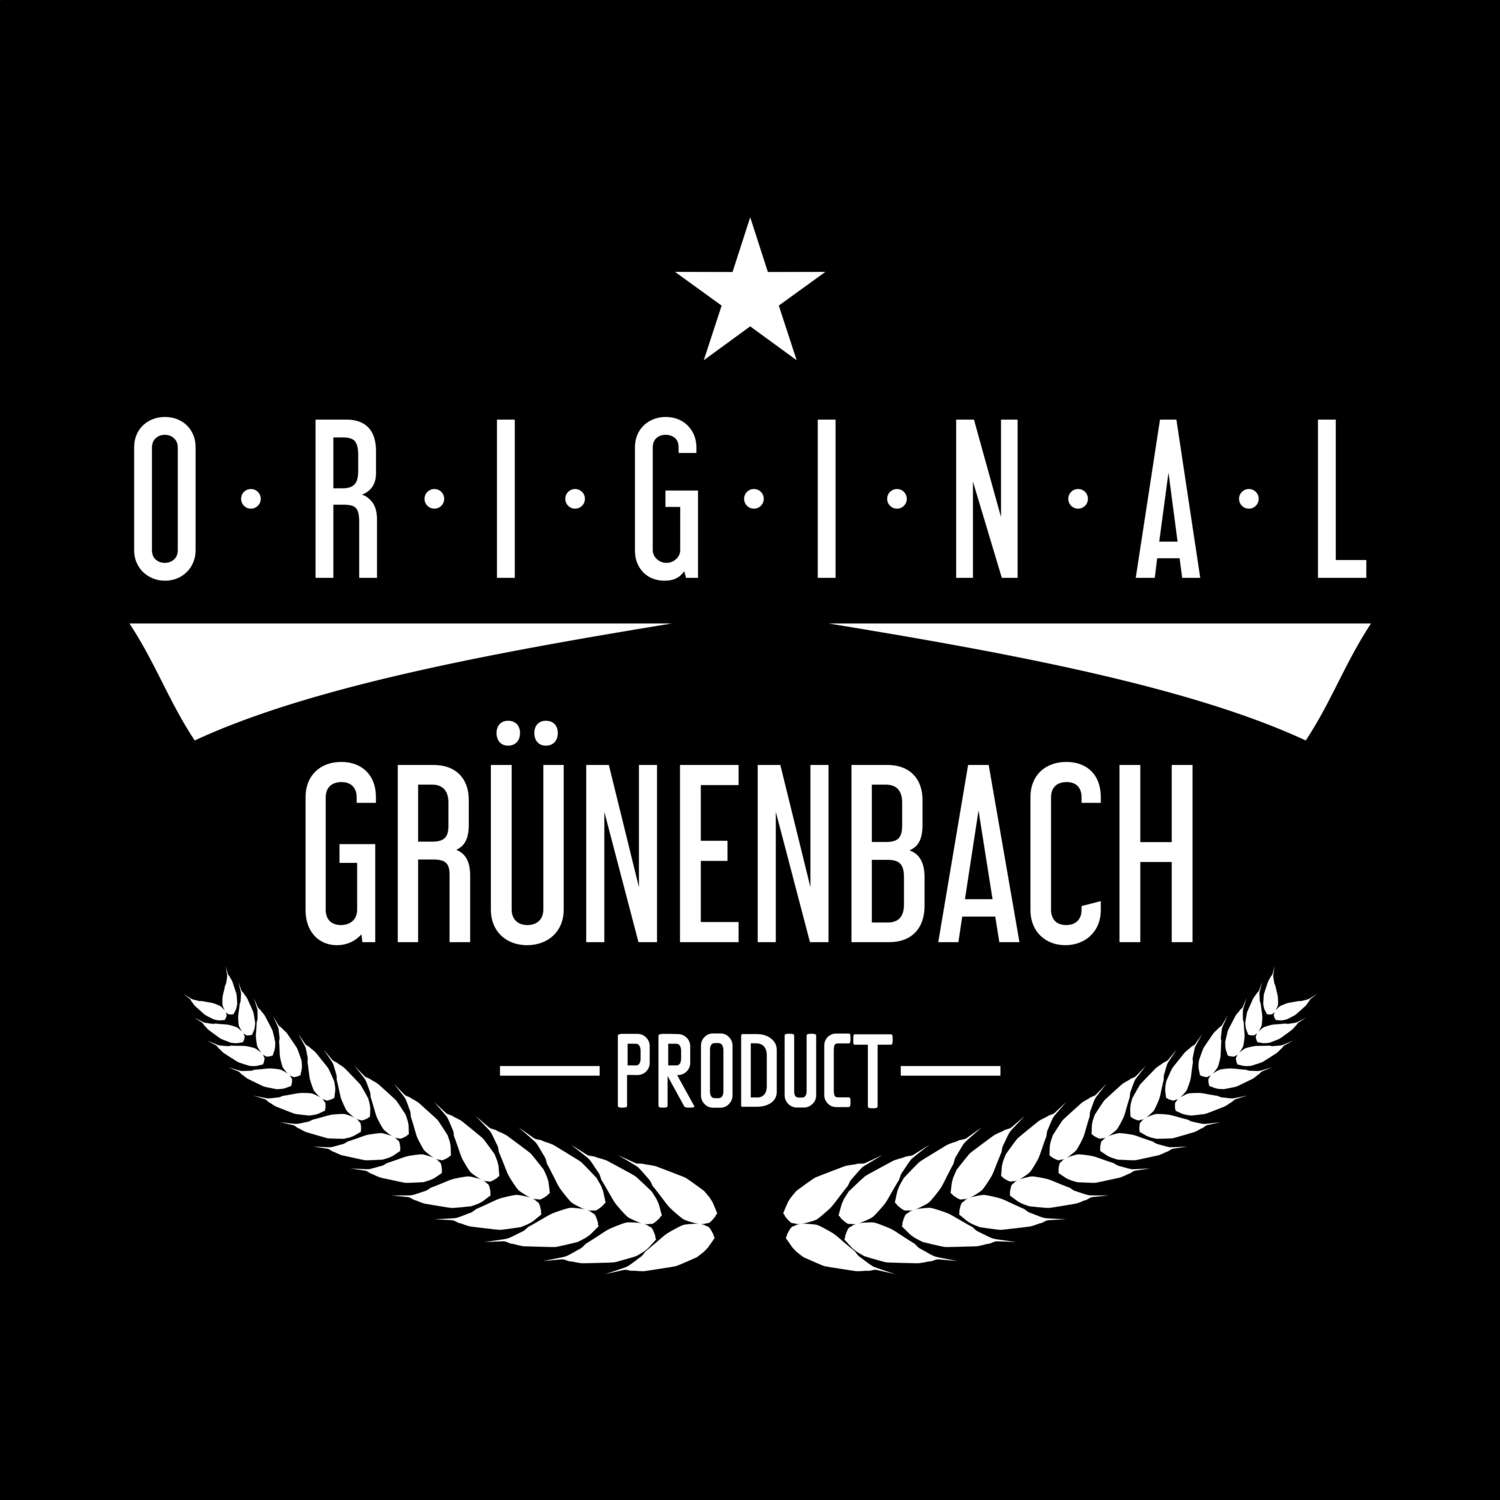 Grünenbach T-Shirt »Original Product«